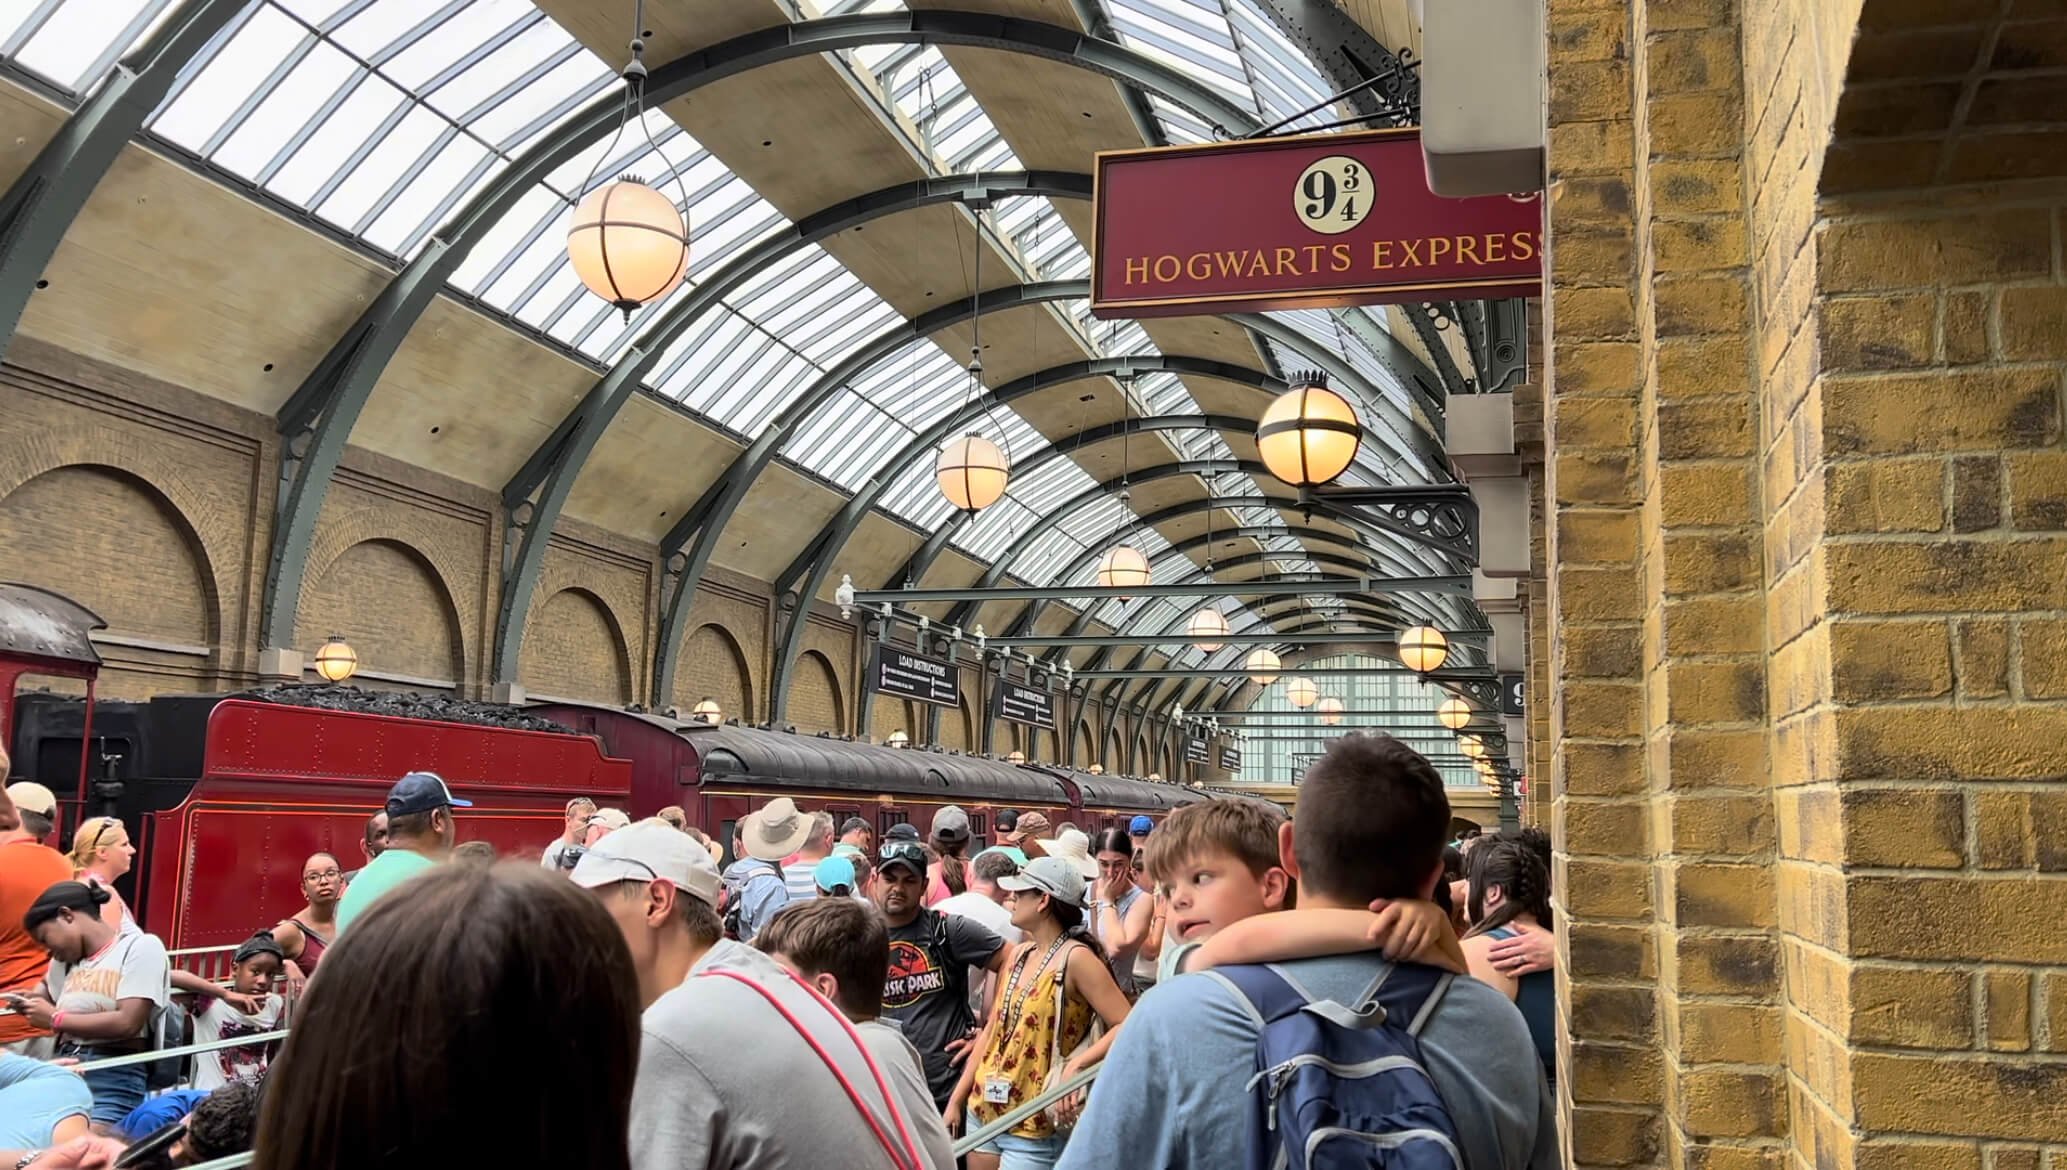 Platform 9 3/4 Wizarding World of Harry Potter